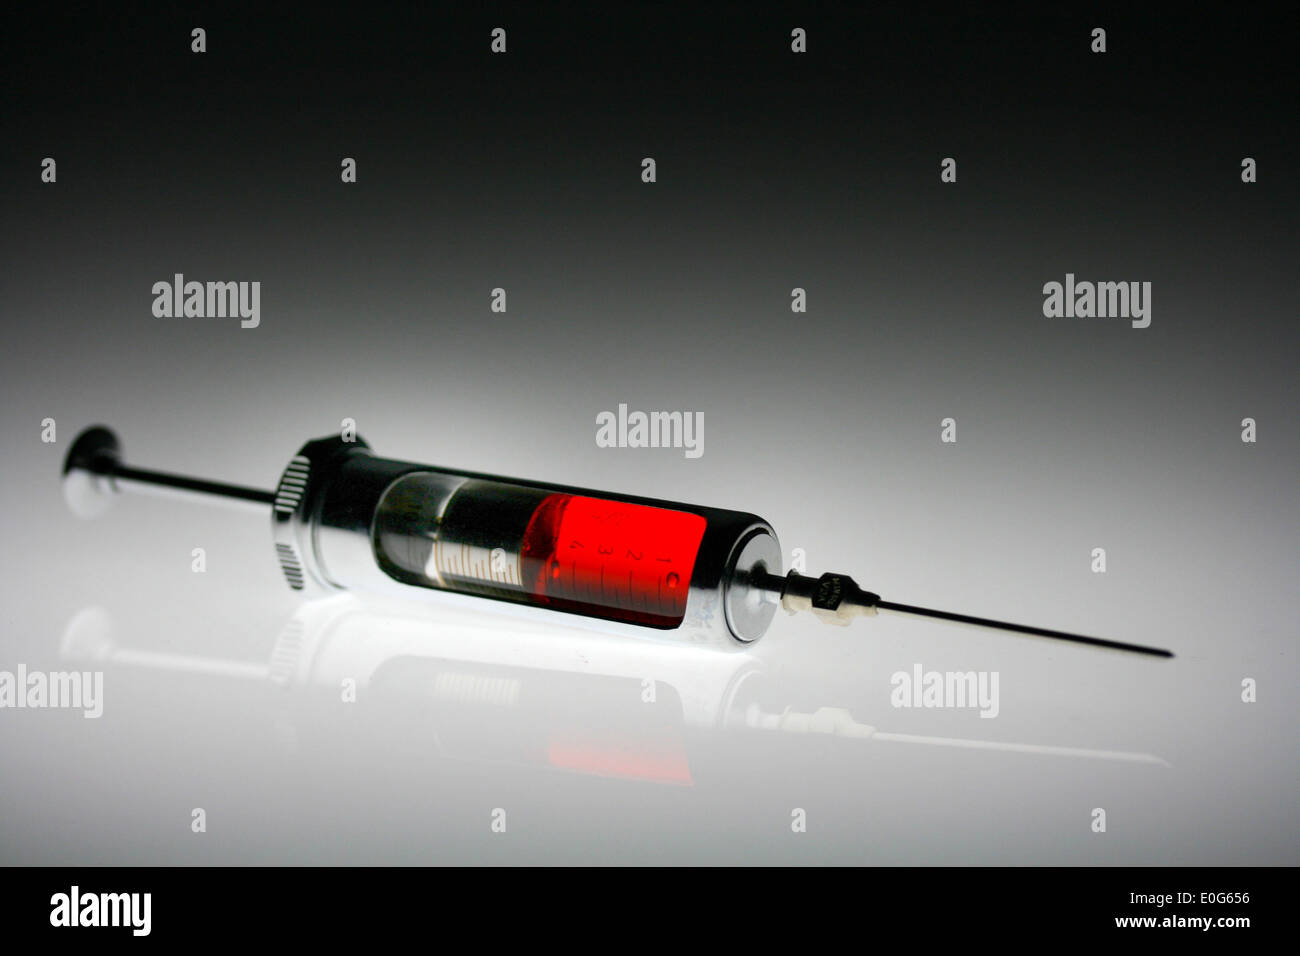 Syringe with red liquid Stock Photo